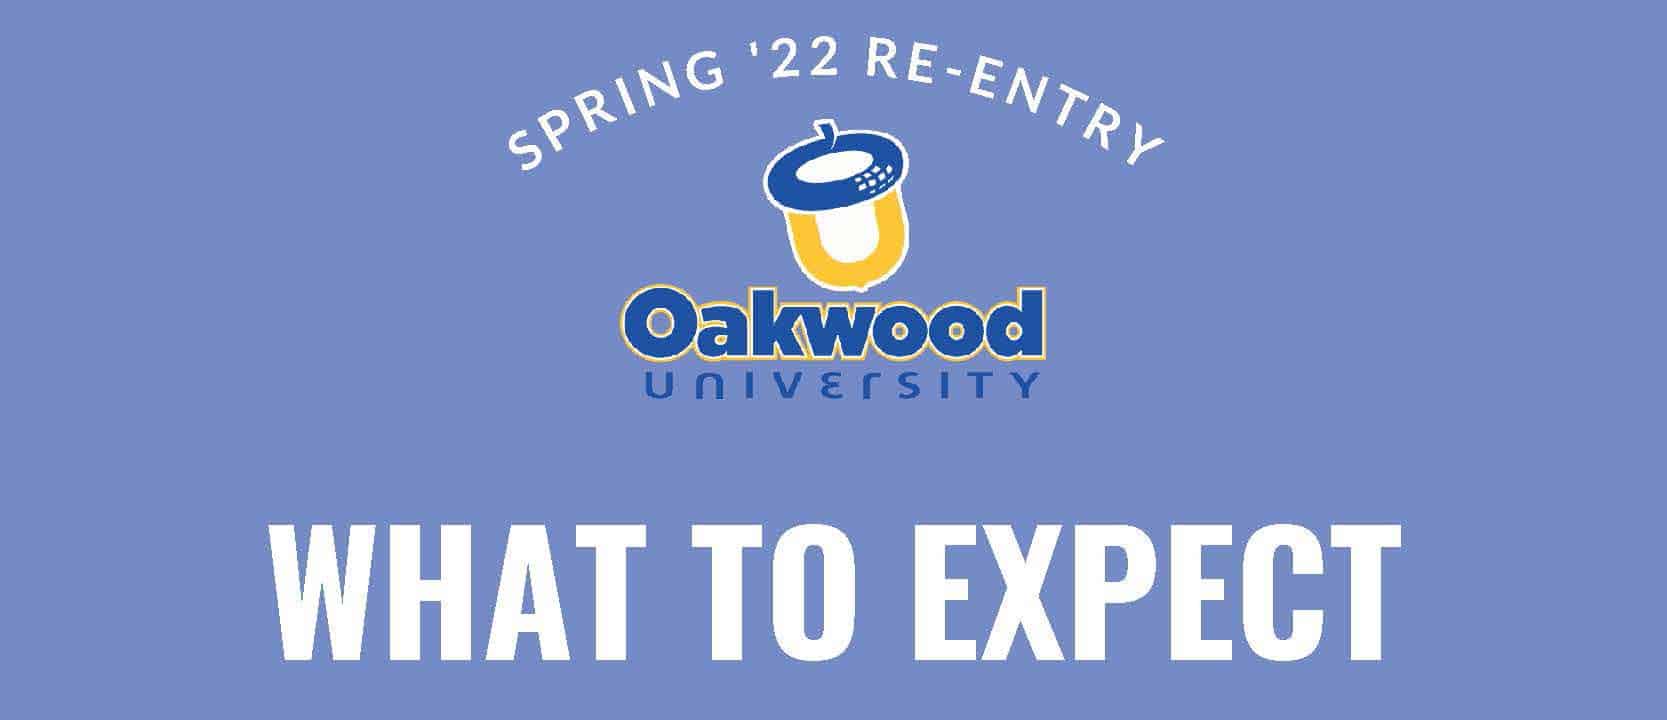 Spring '22 ReEntry Oakwood University